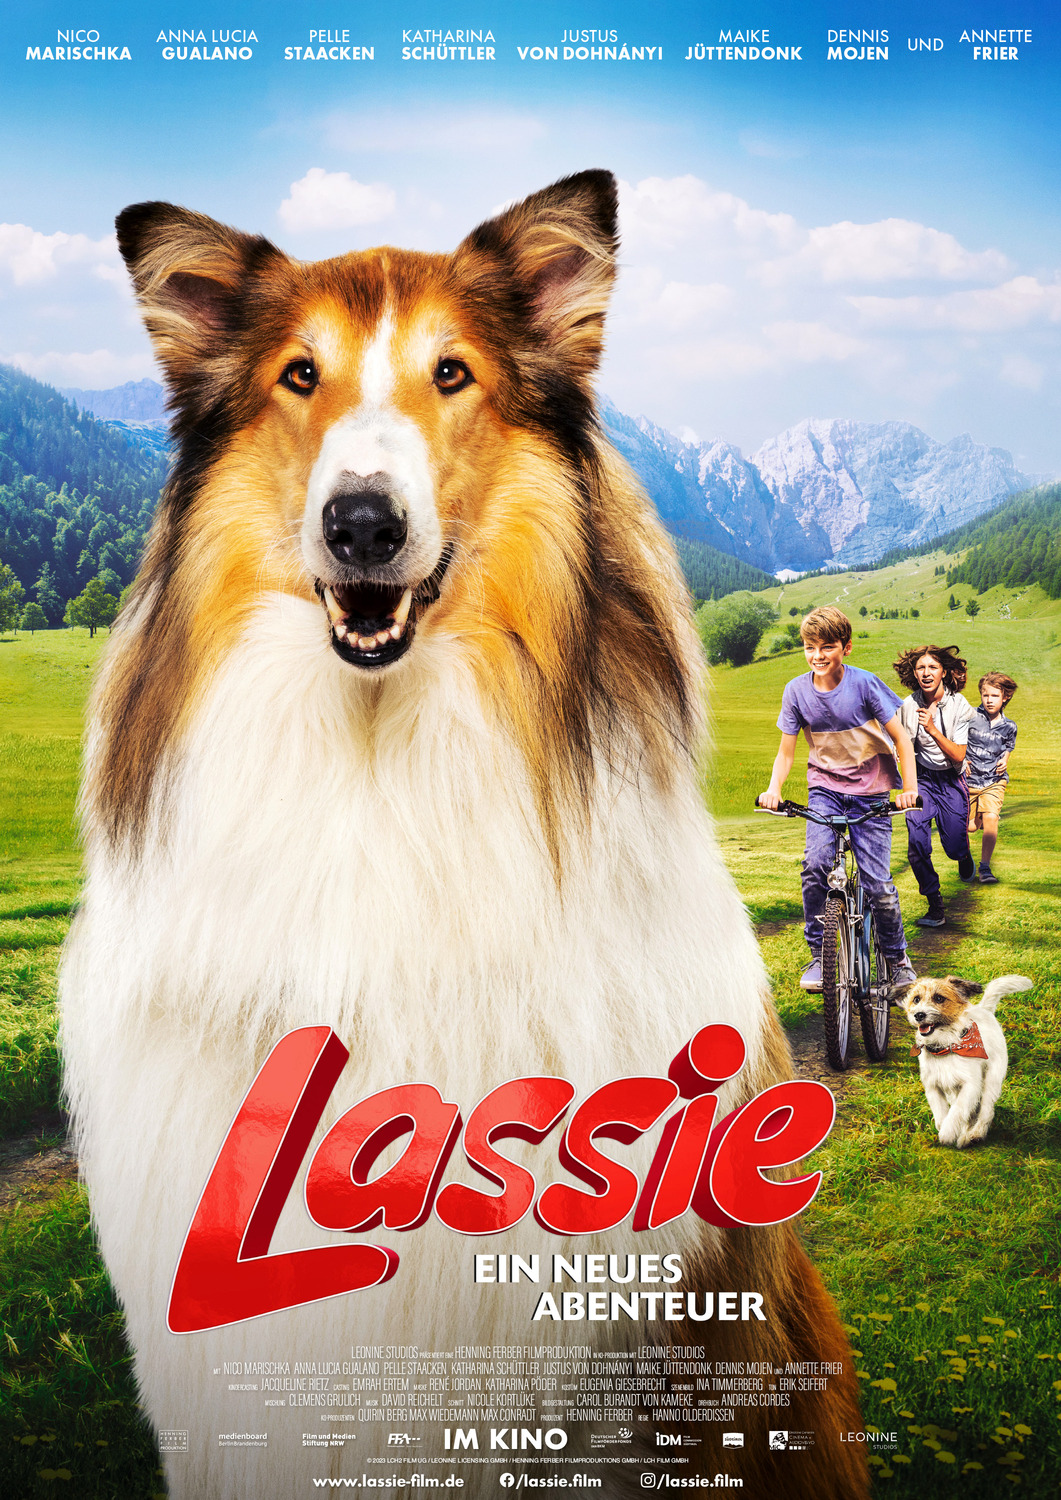 Extra Large Movie Poster Image for Lassie - Ein neues Abenteuer 